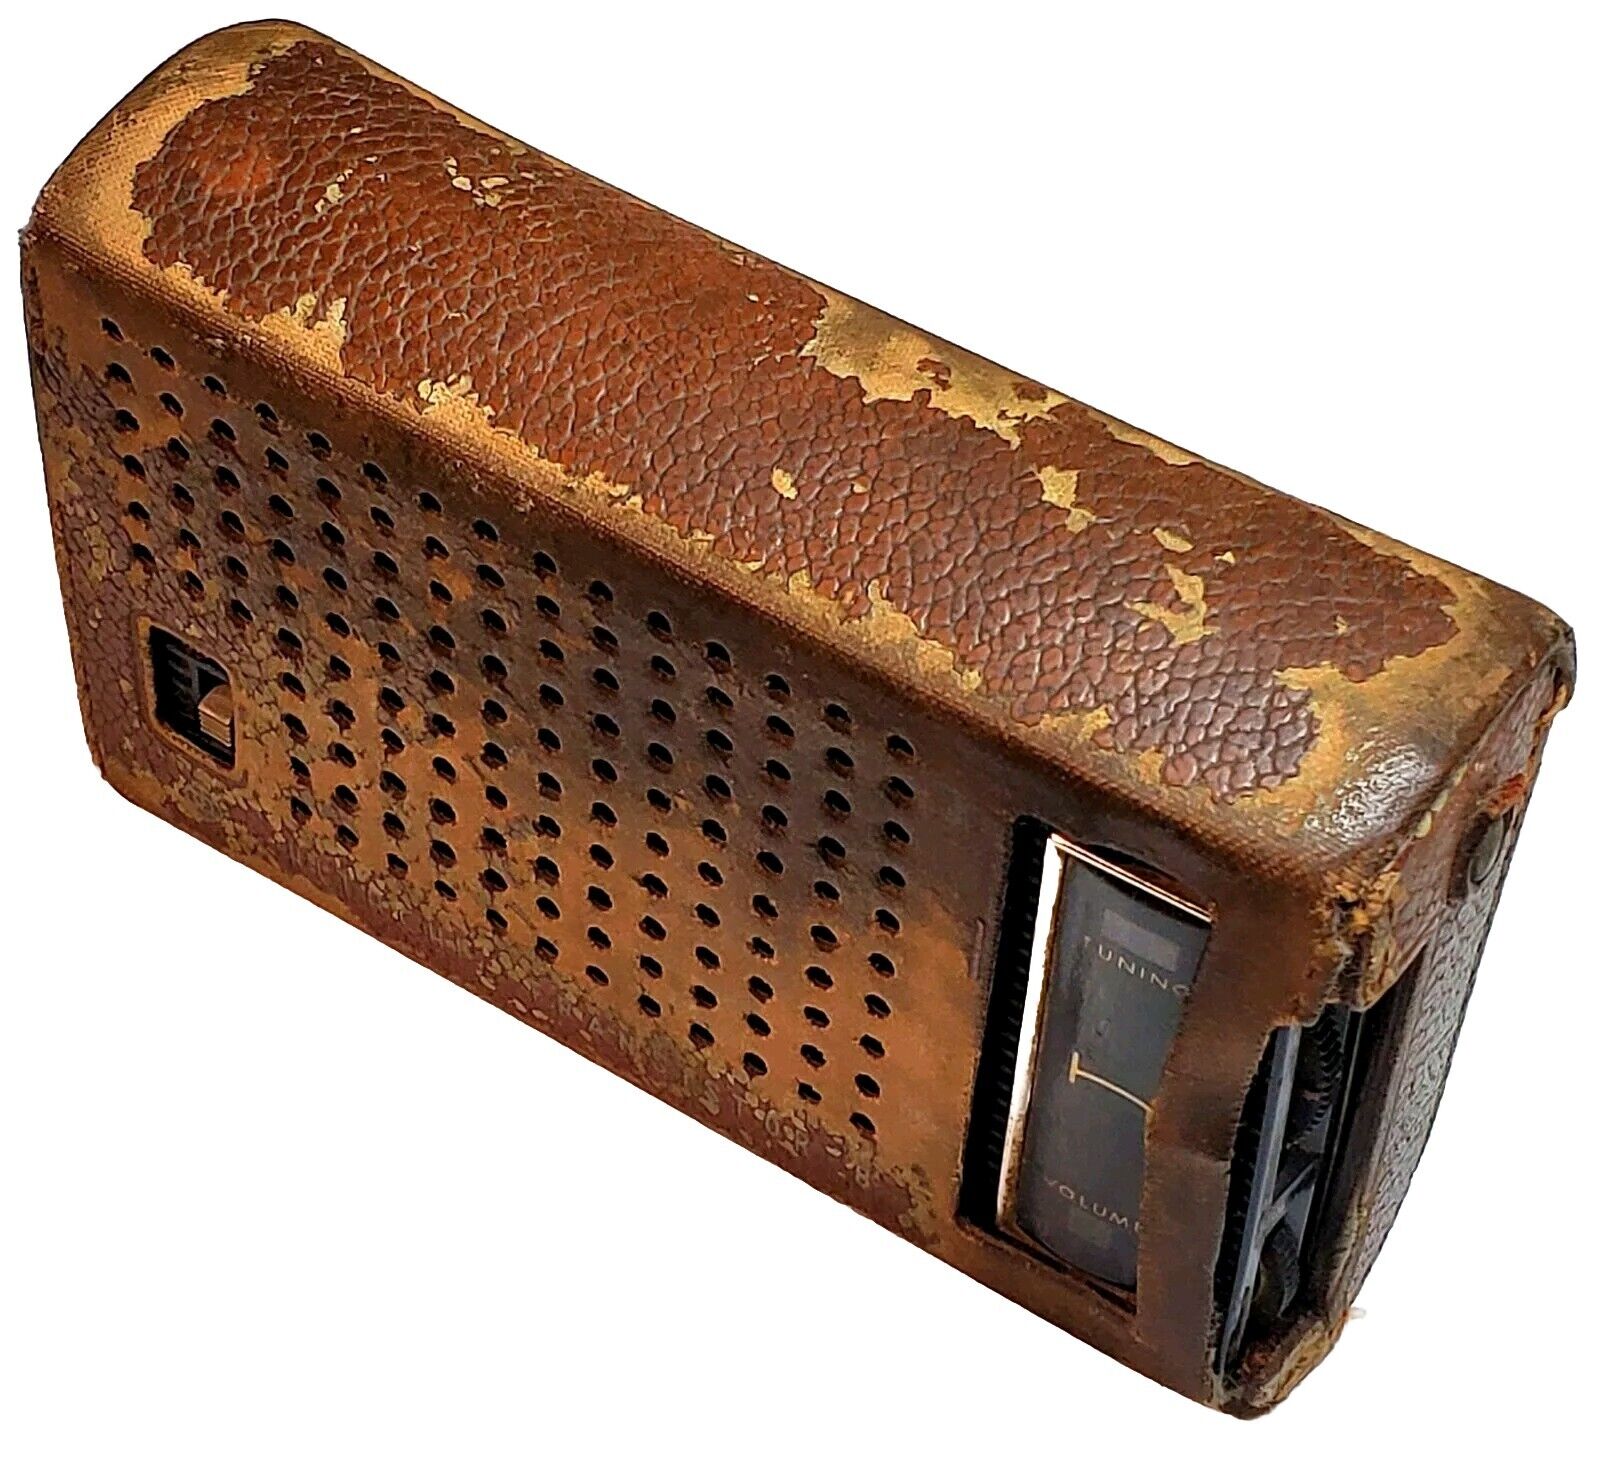 VTG Hitachi Radio 8 Transistor TH-848 & Brown Leather Case Japan Tested Working